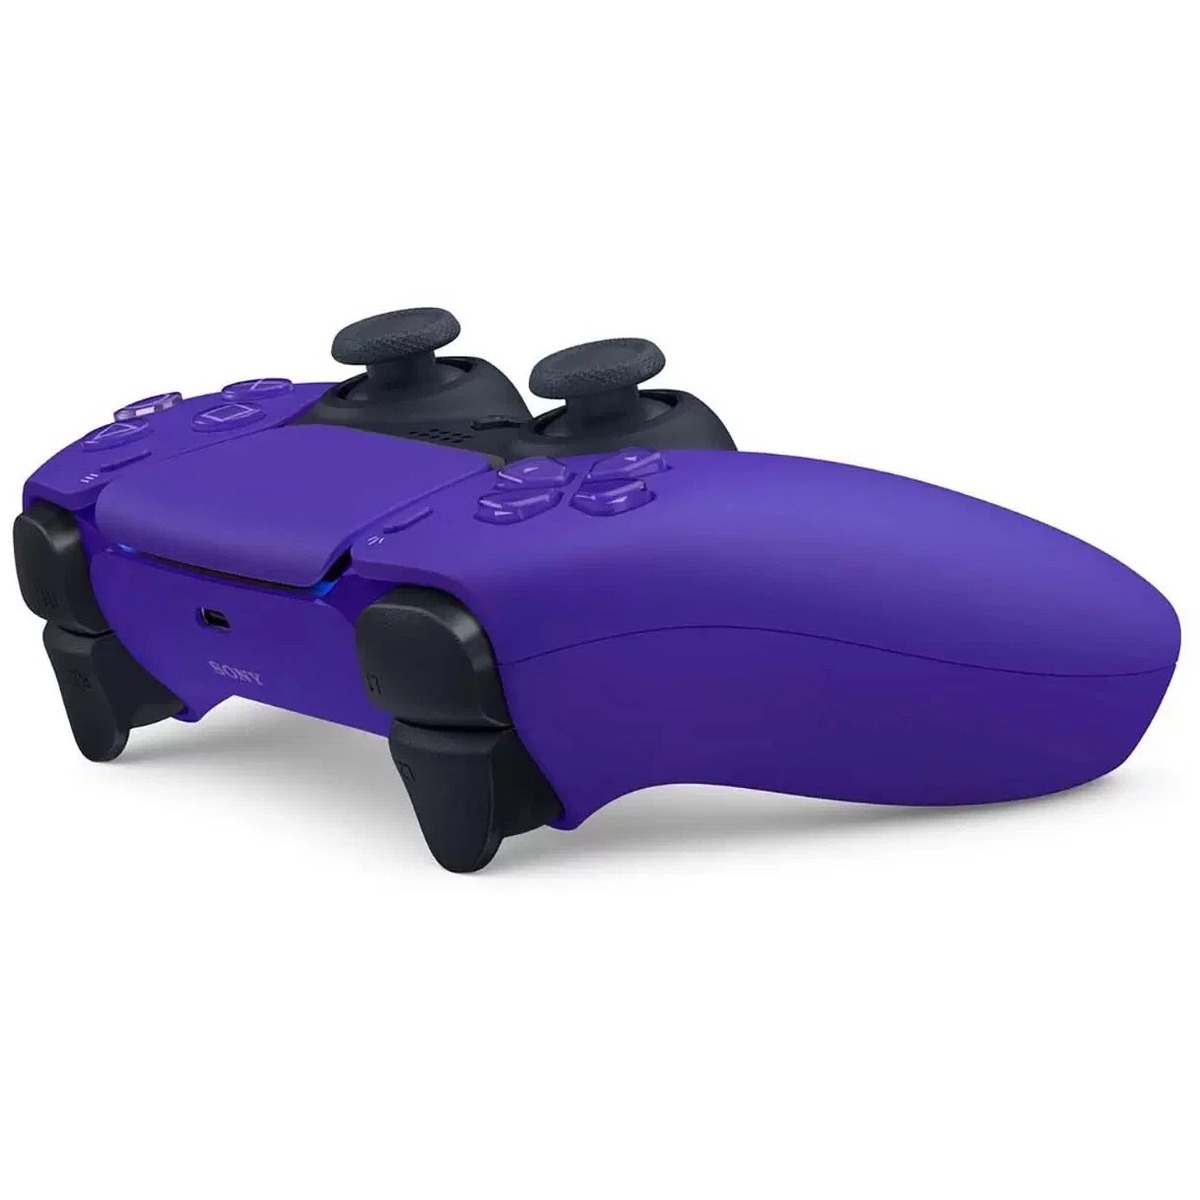 Геймпад беспроводной Sony DualSense (Цвет: Galactic Purple)